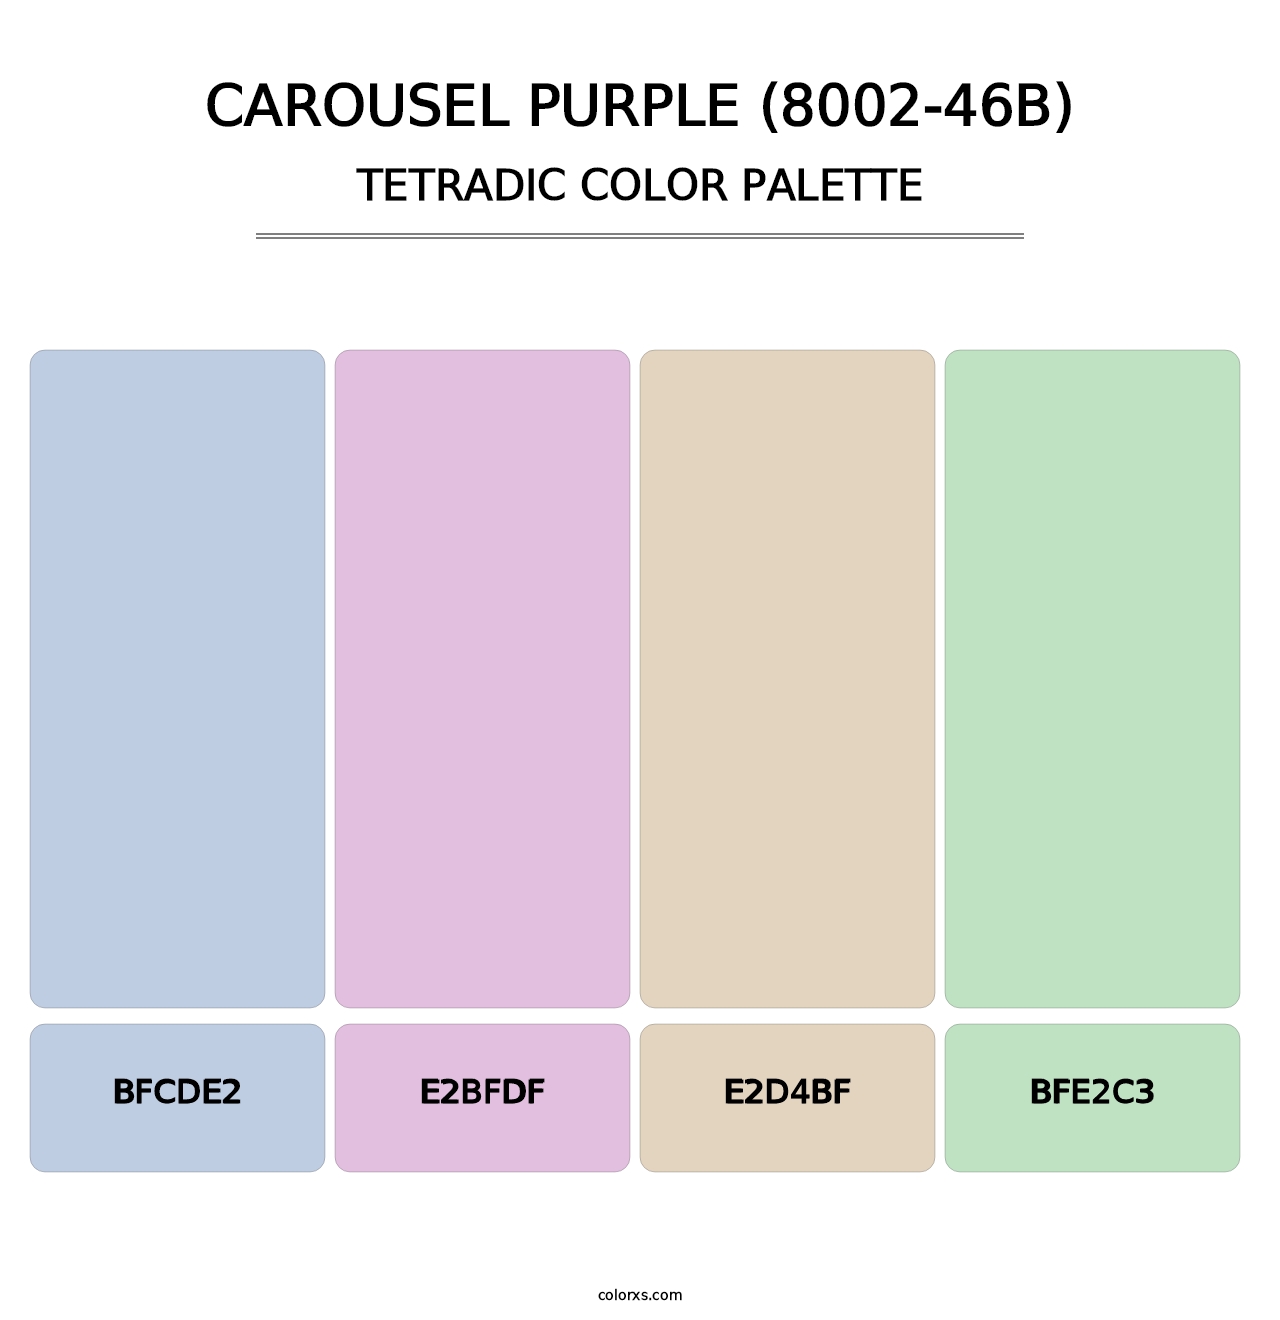 Carousel Purple (8002-46B) - Tetradic Color Palette